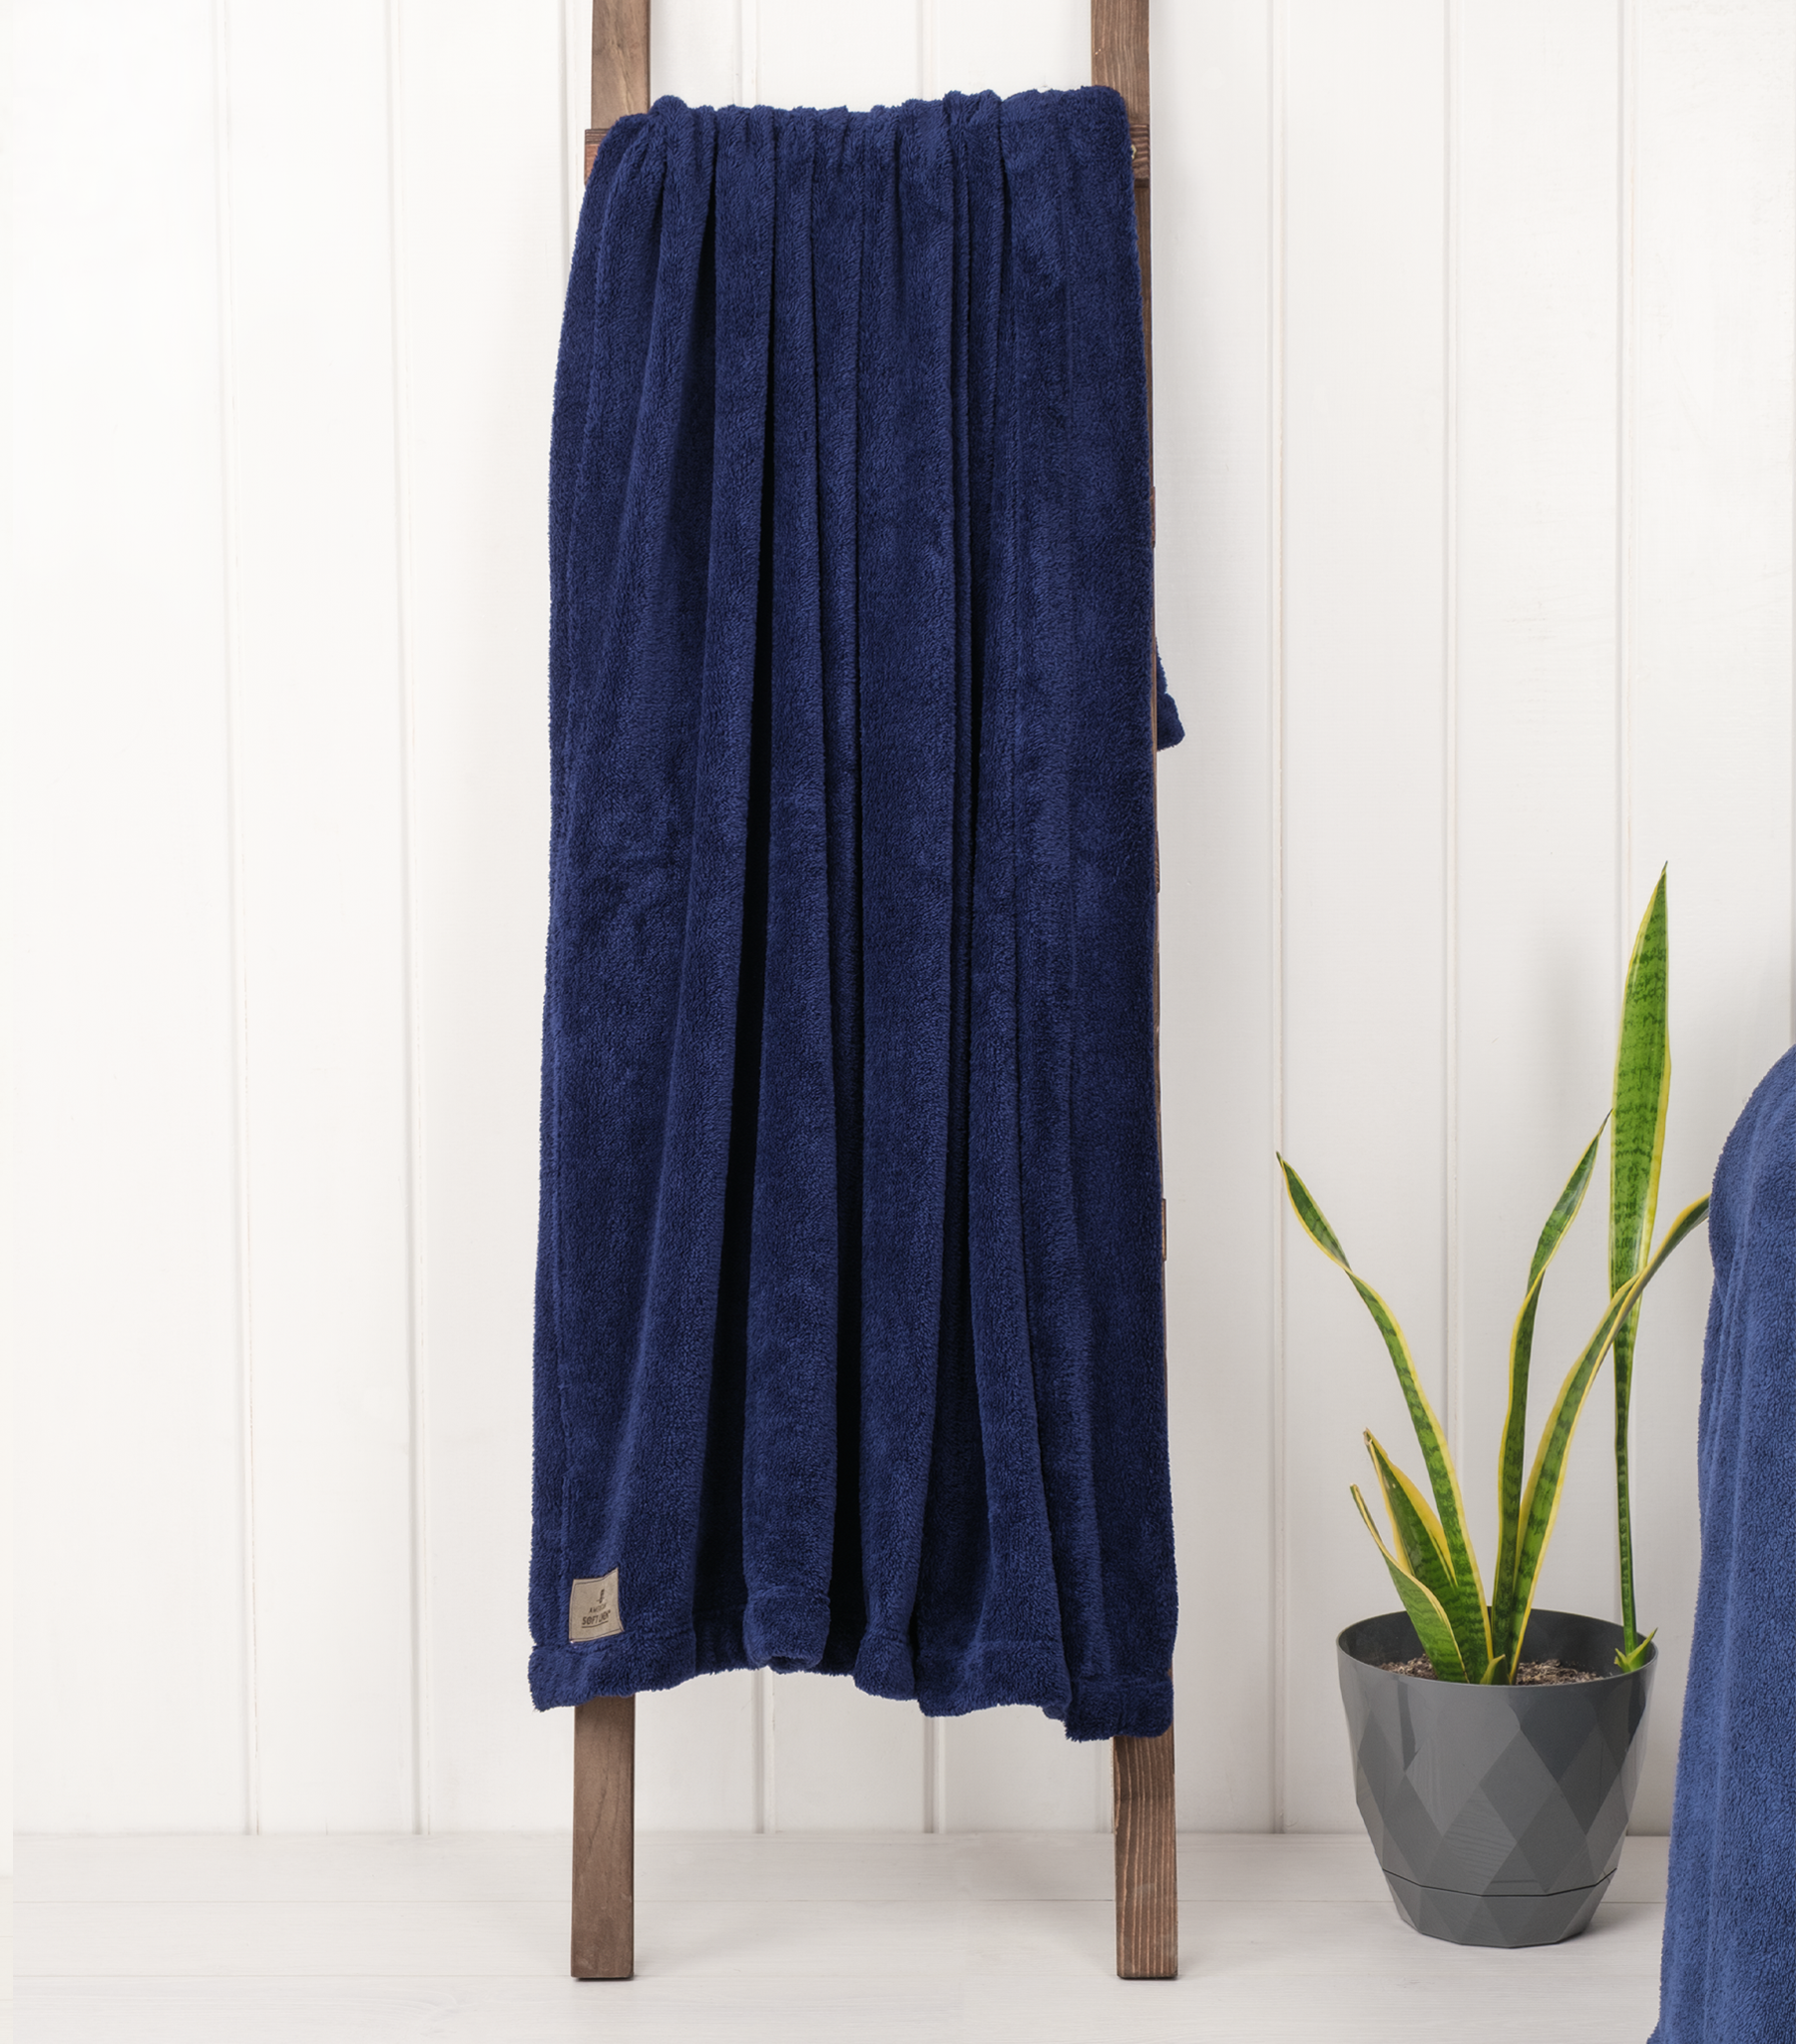 American Soft Linen - Bedding Fleece Blanket - Throw Size 50x60 inches - Navy-Blue - 2